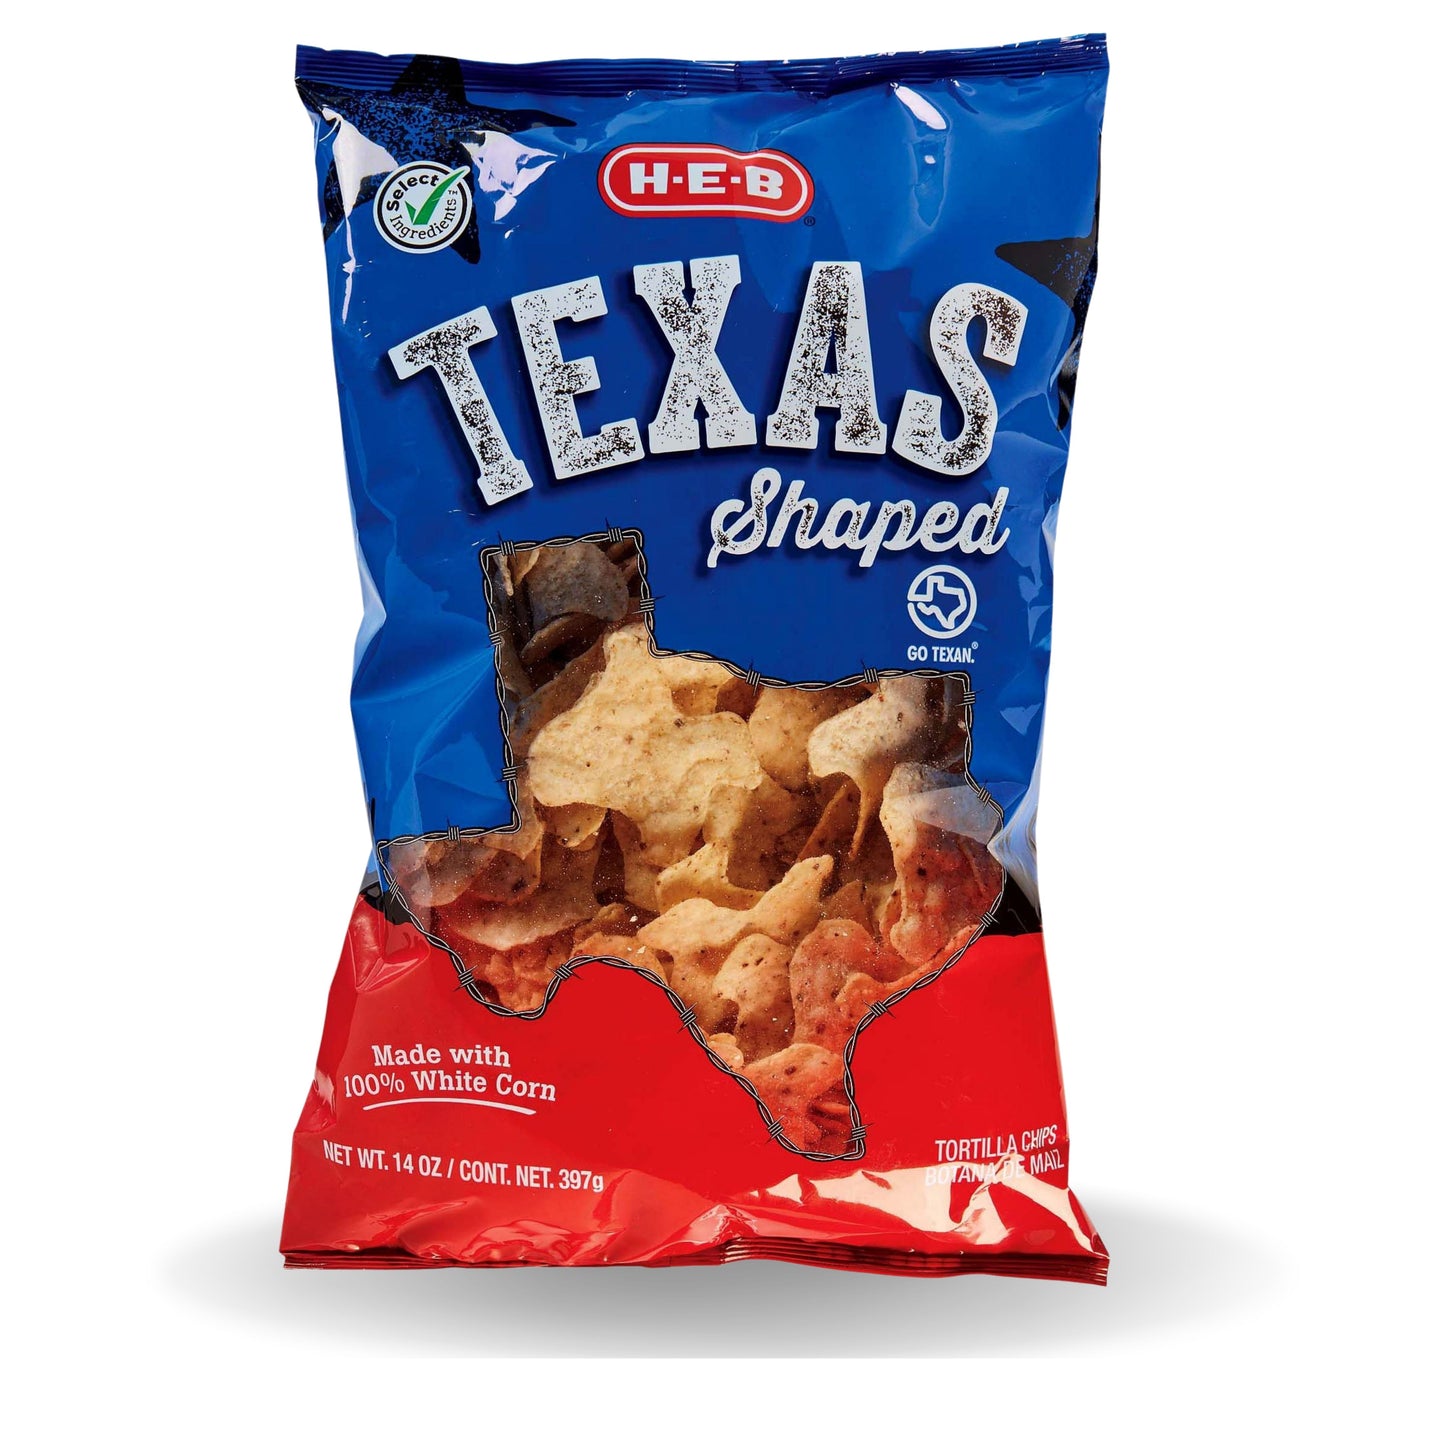 H-E-B Texas Shaped Tortilla Chips